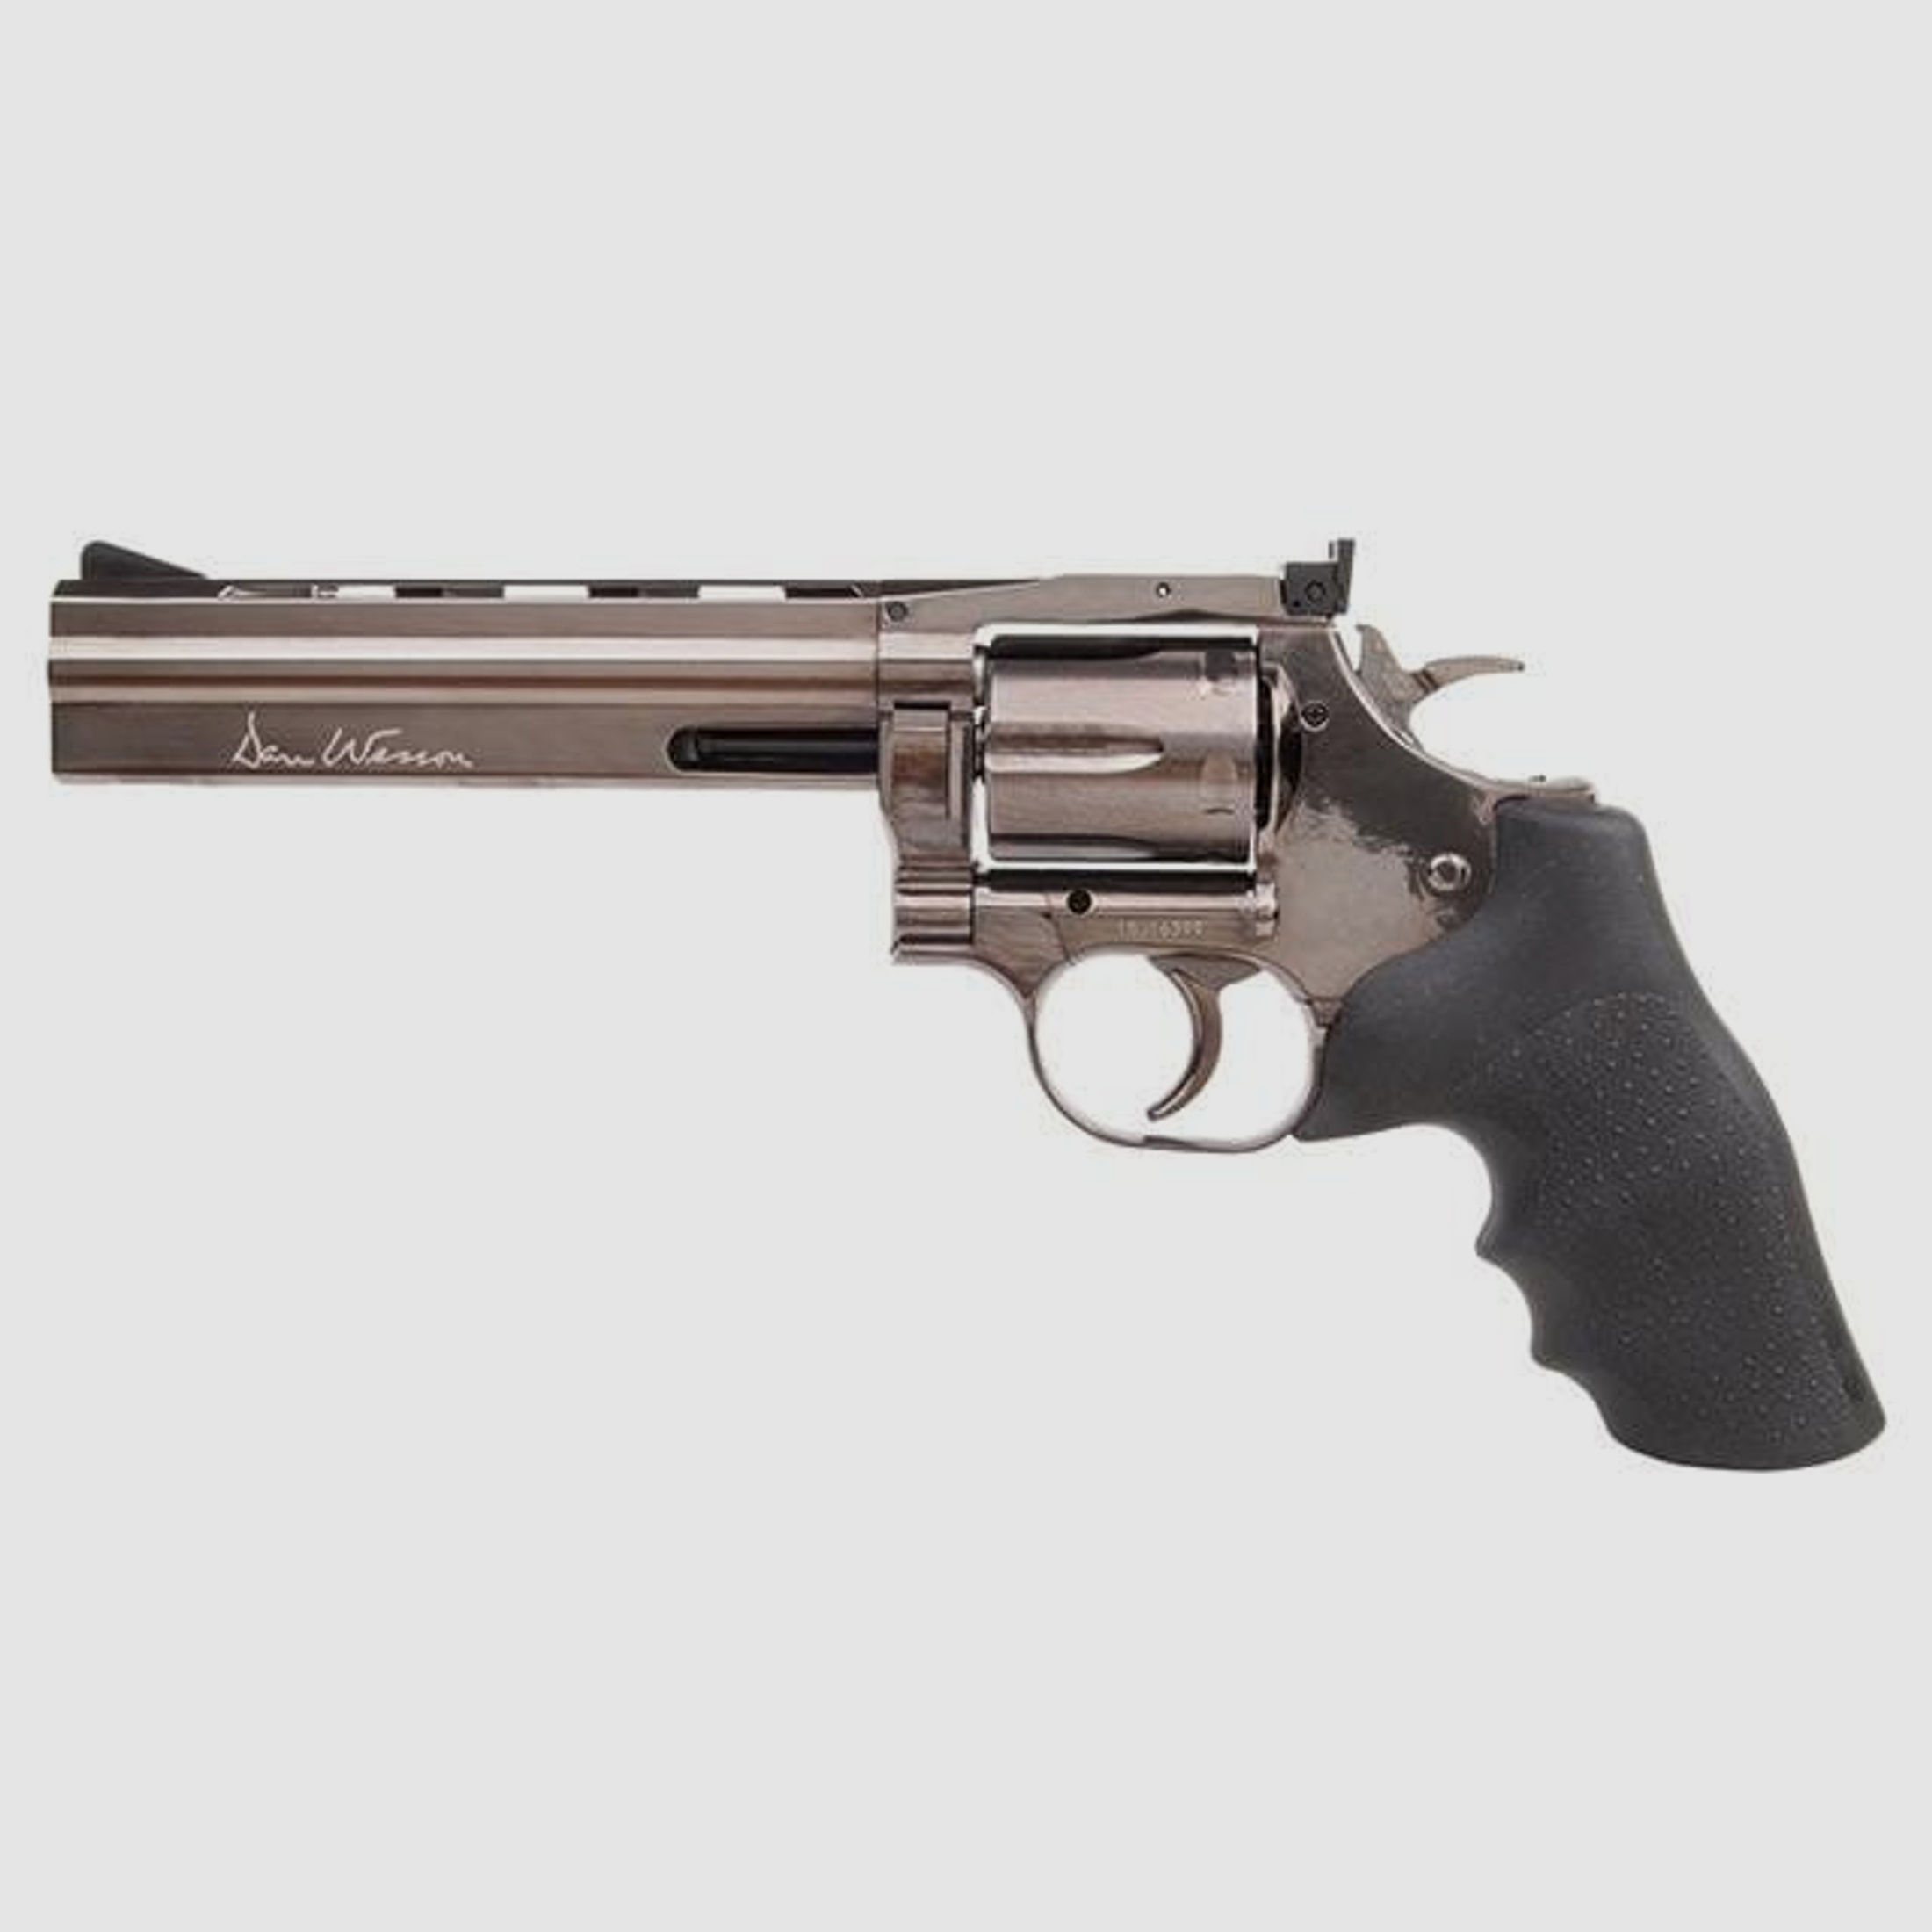 Dan Wesson 715 6' Luftdruck Revolver .177